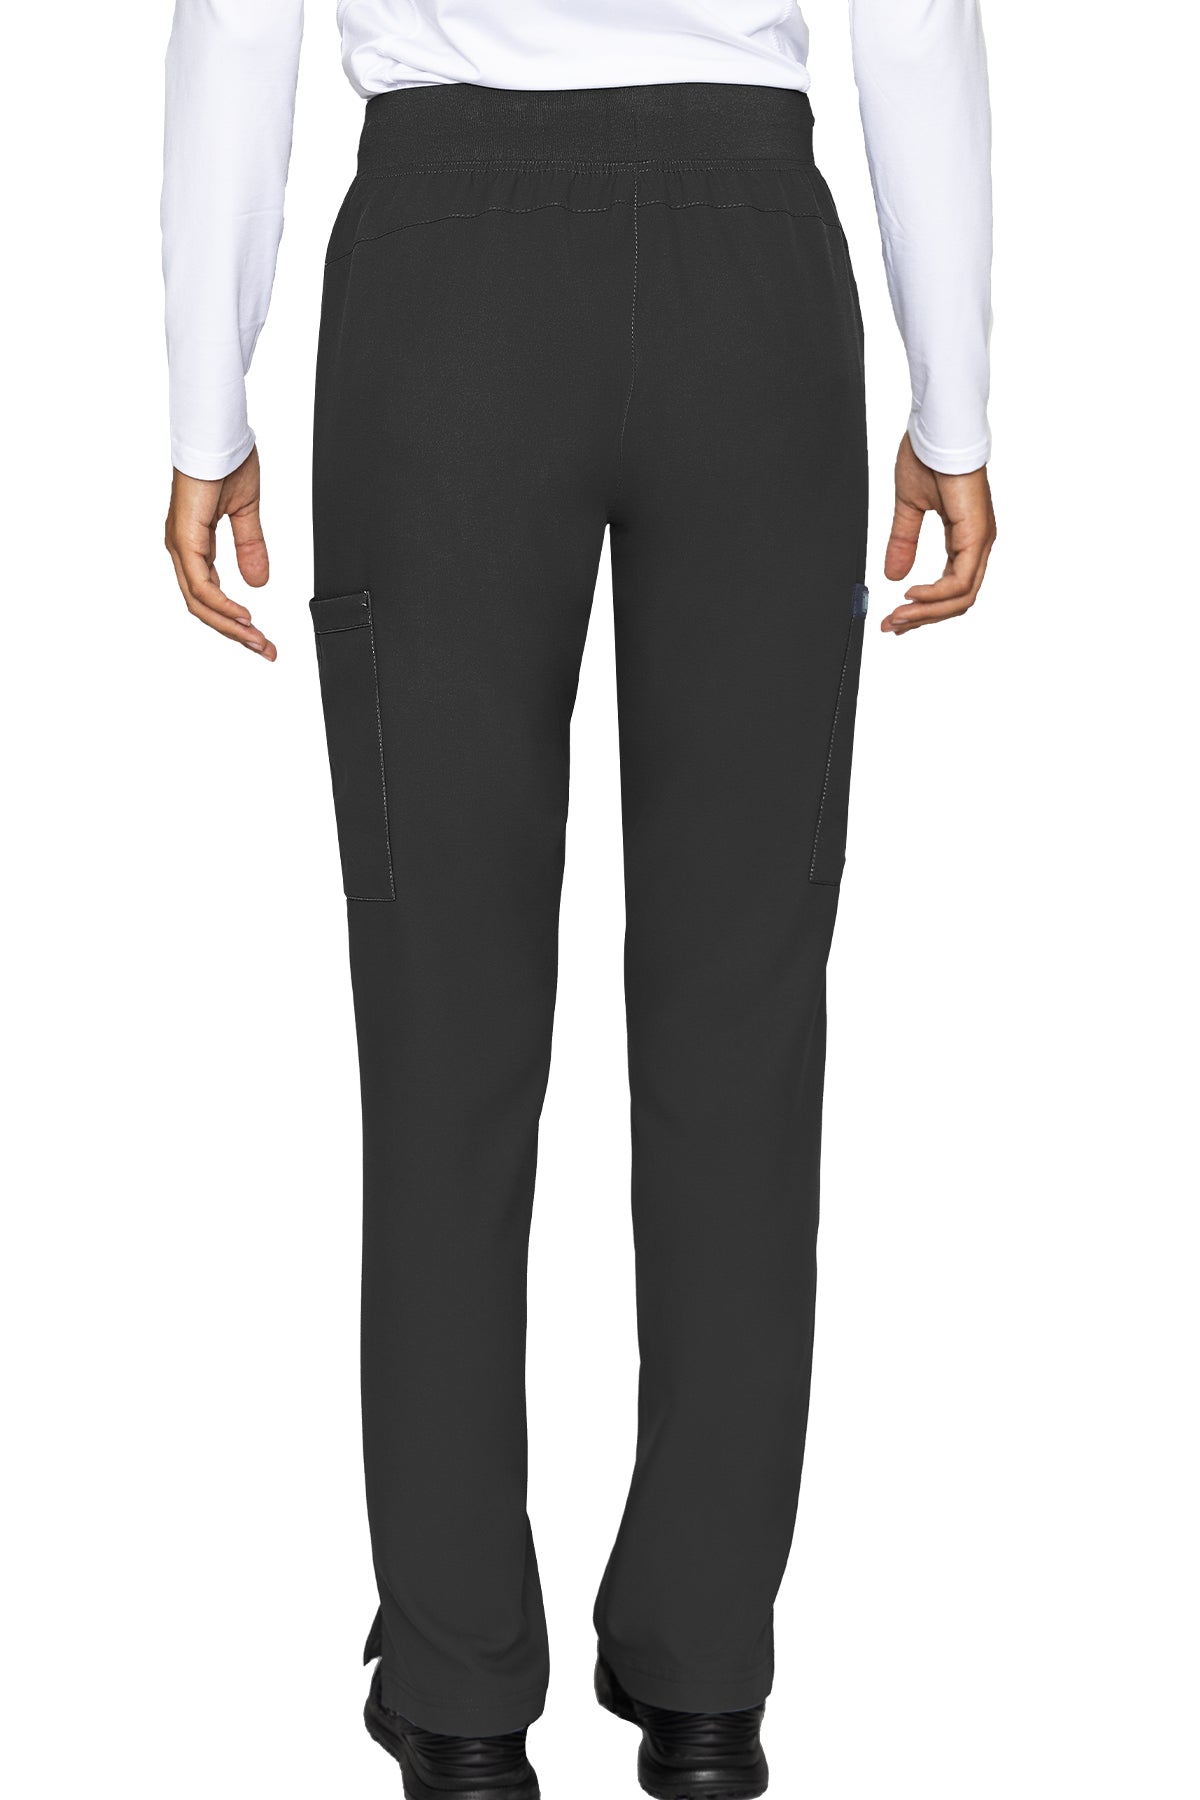 Med Couture 2702 Insight Women's Zipper Pocket Pant Black back